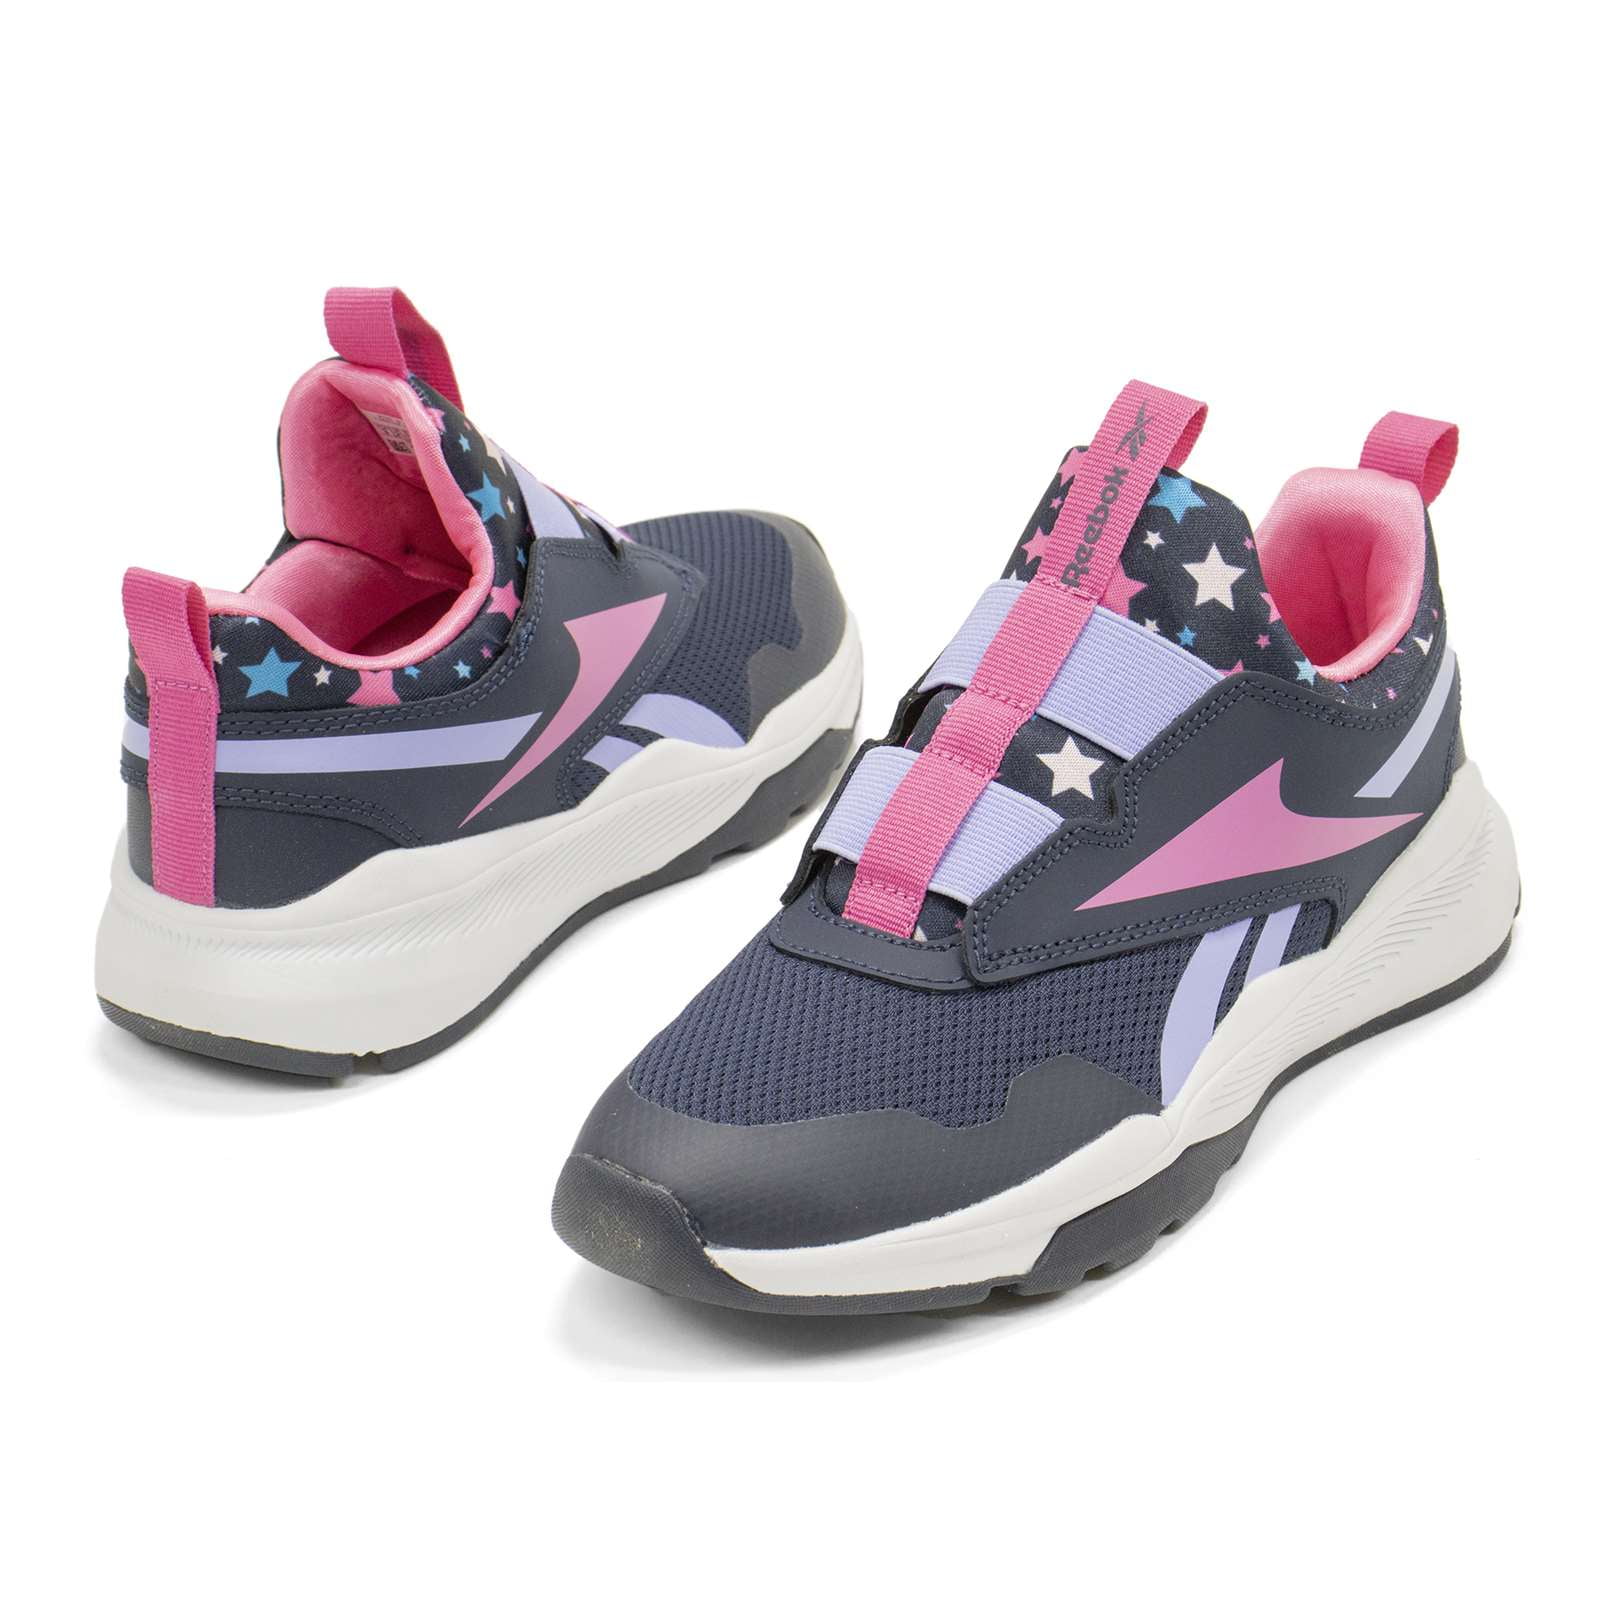 Reebok Girls Xt Sprinter Slip-On Navy Pink,7 \\ True Shoes, M US Vector